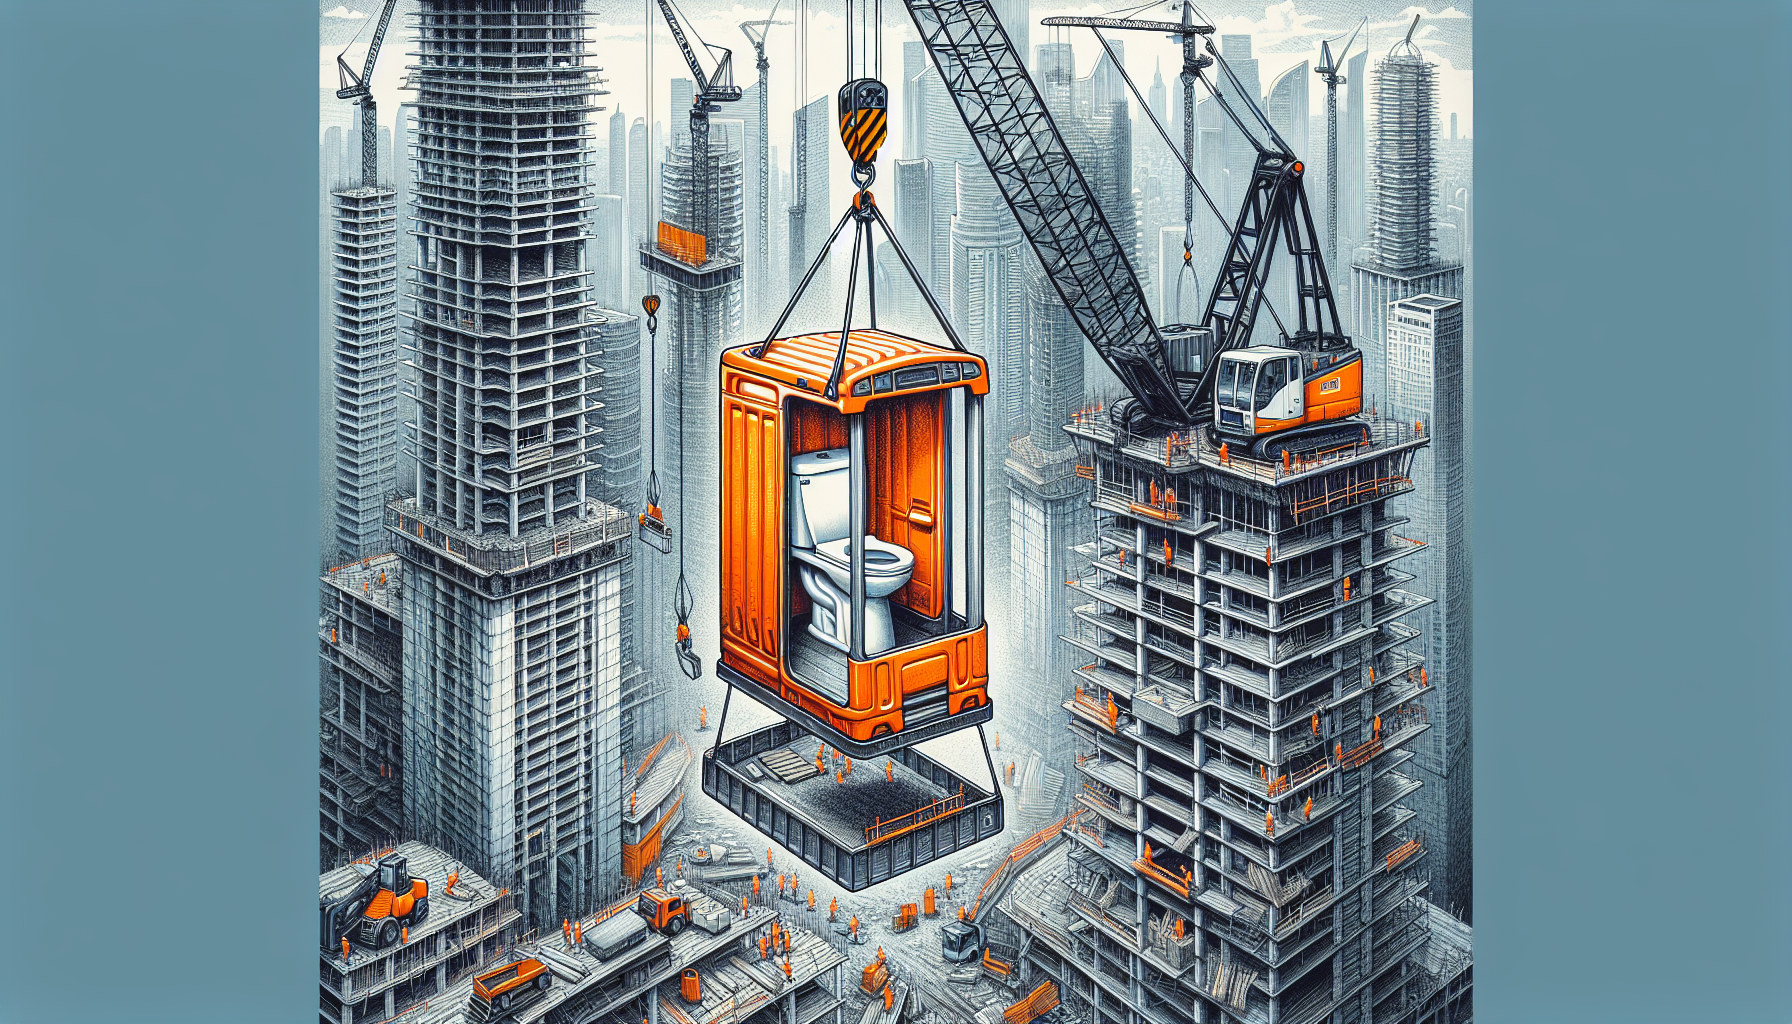 A fun high rise construction toilet illustration